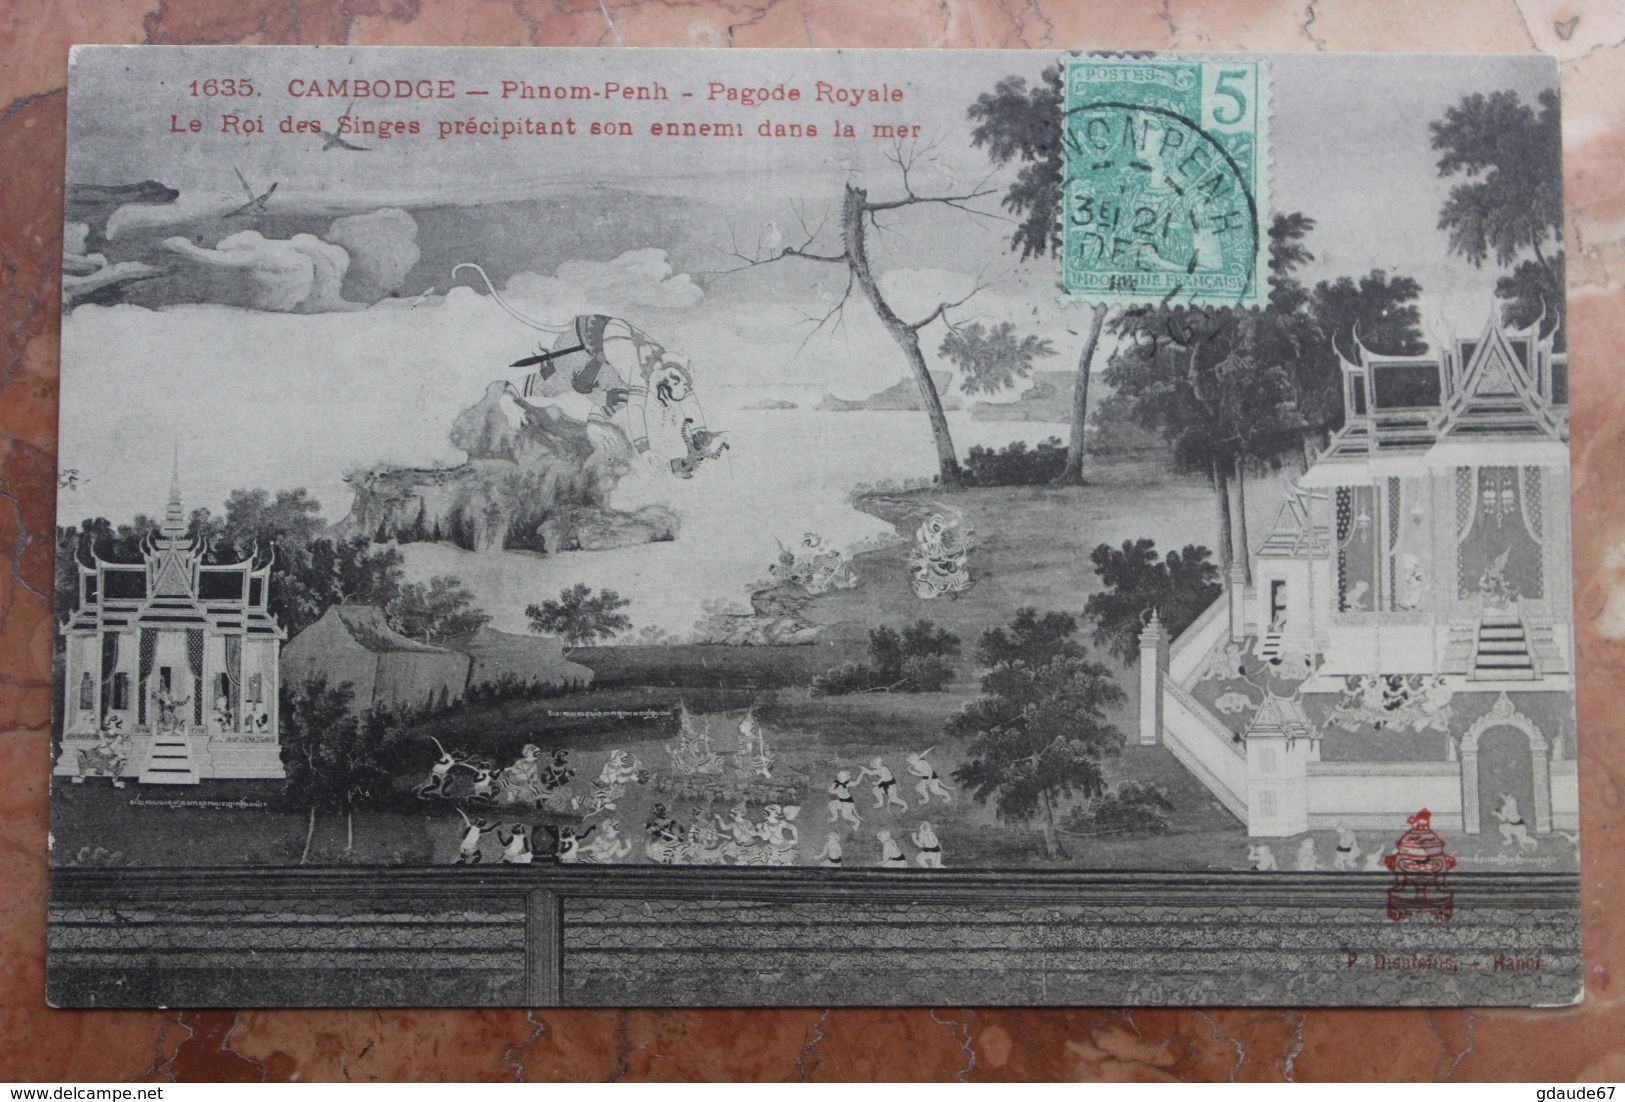 PHNOM-PENH (CAMBODGE) - 1635. PAGODE ROYALE - LE ROI DES SINGES PRECIPITANT SON ENNEMI DANS LA MER - Cambodge